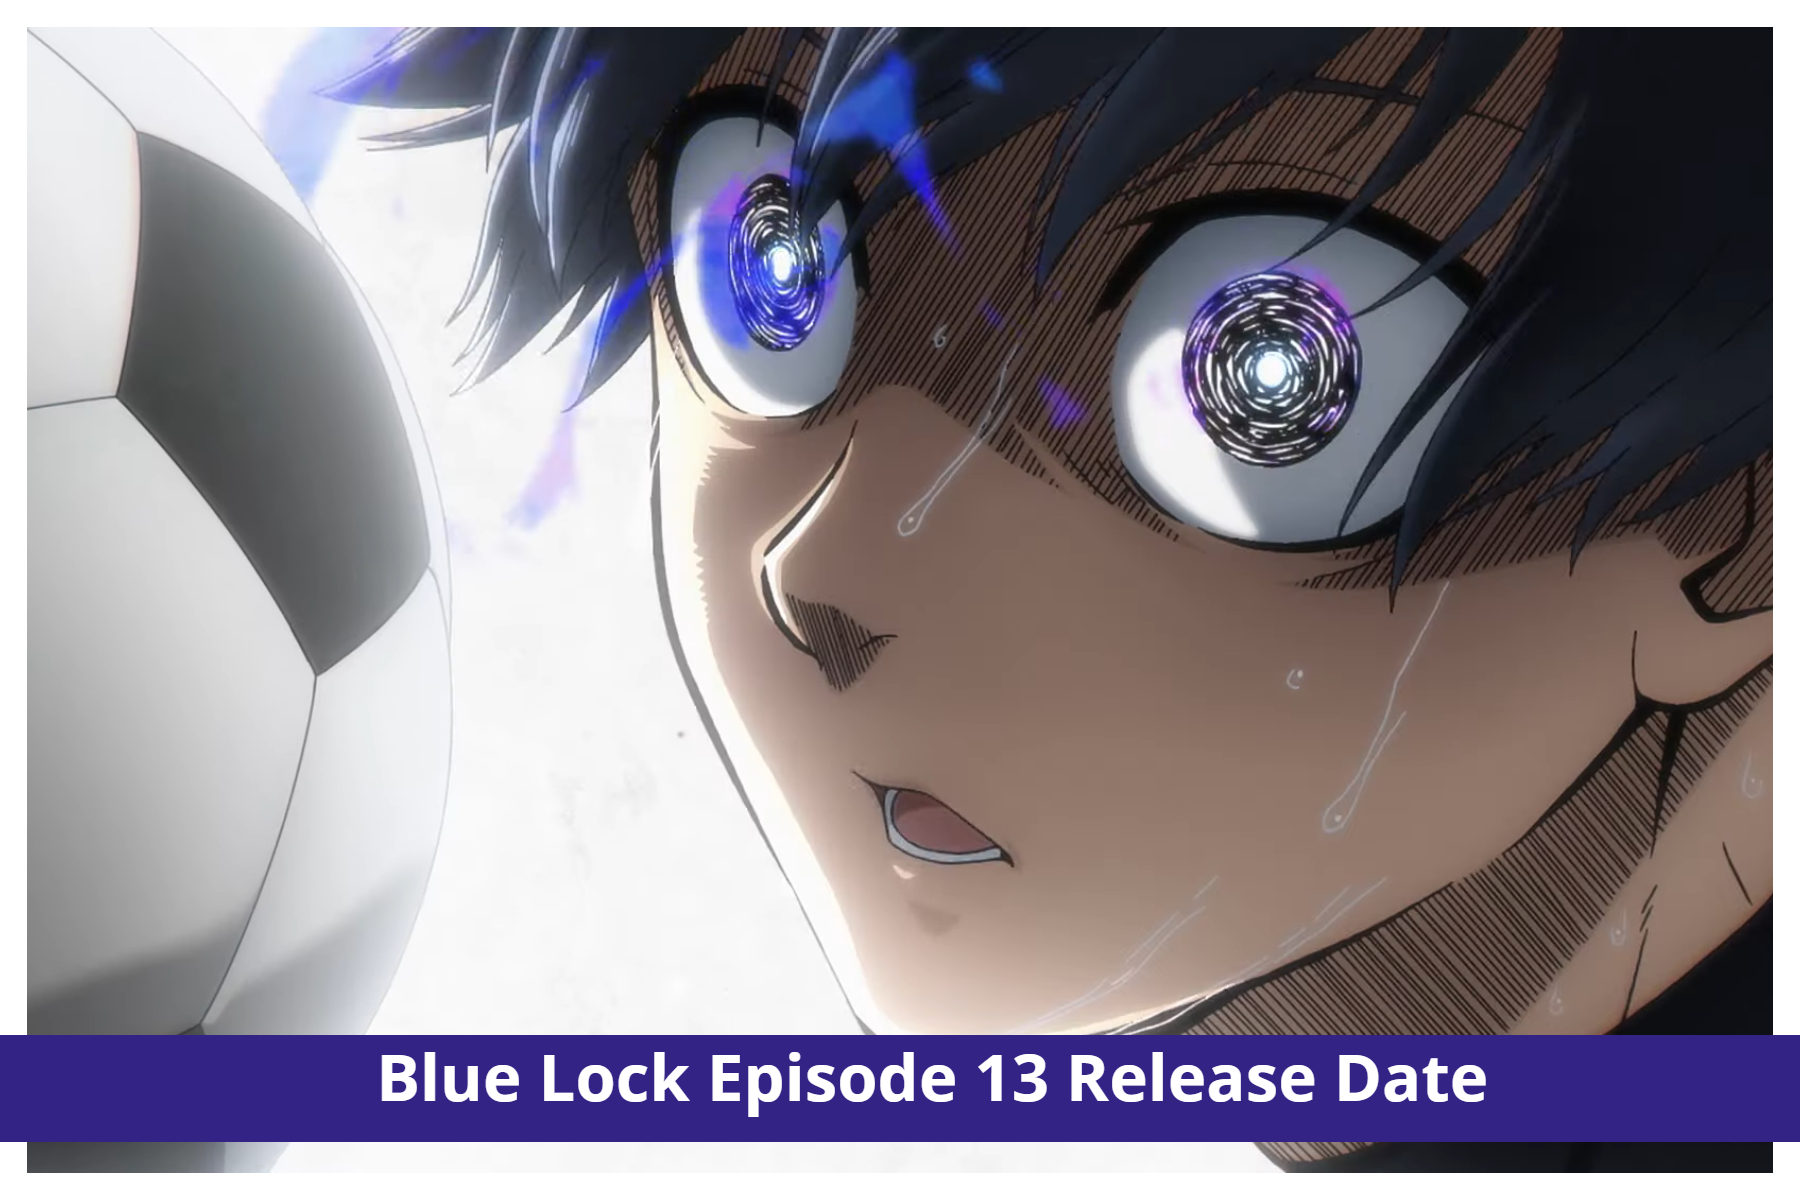 Blue Lock Episode 13: Will It Return? Release Date & More